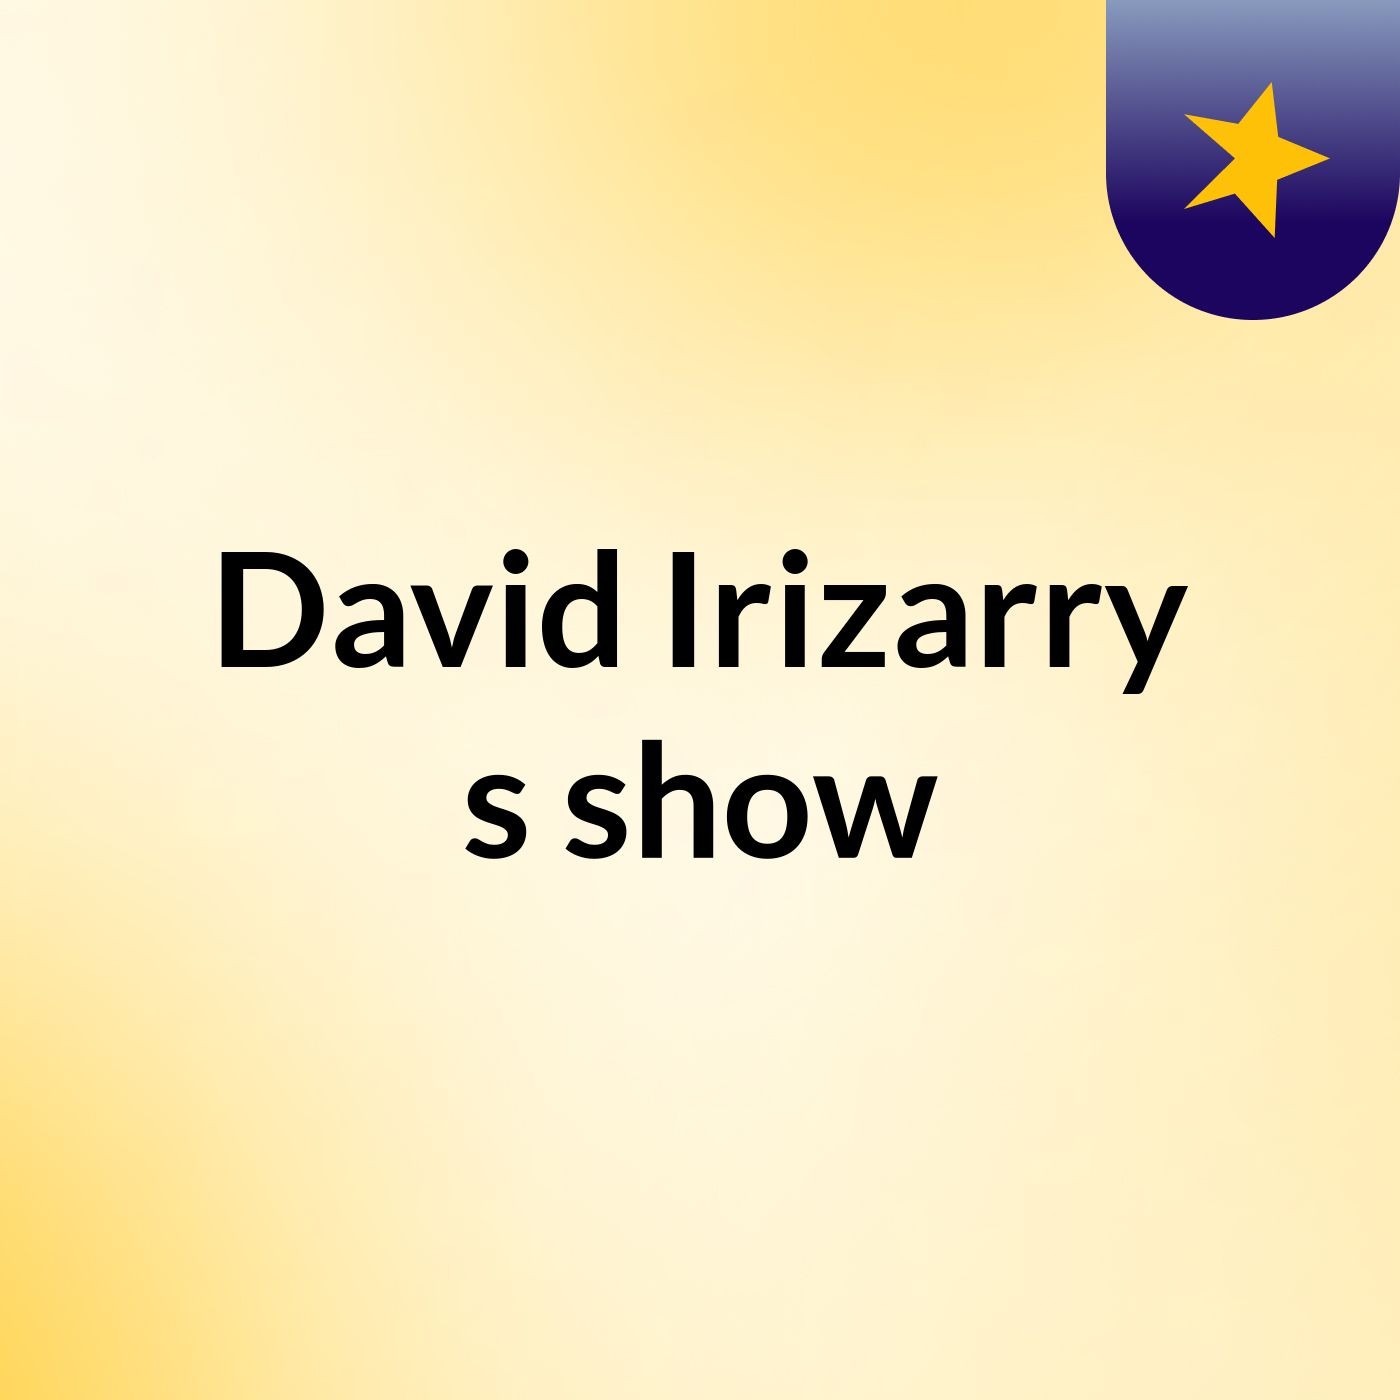 David Irizarry's show